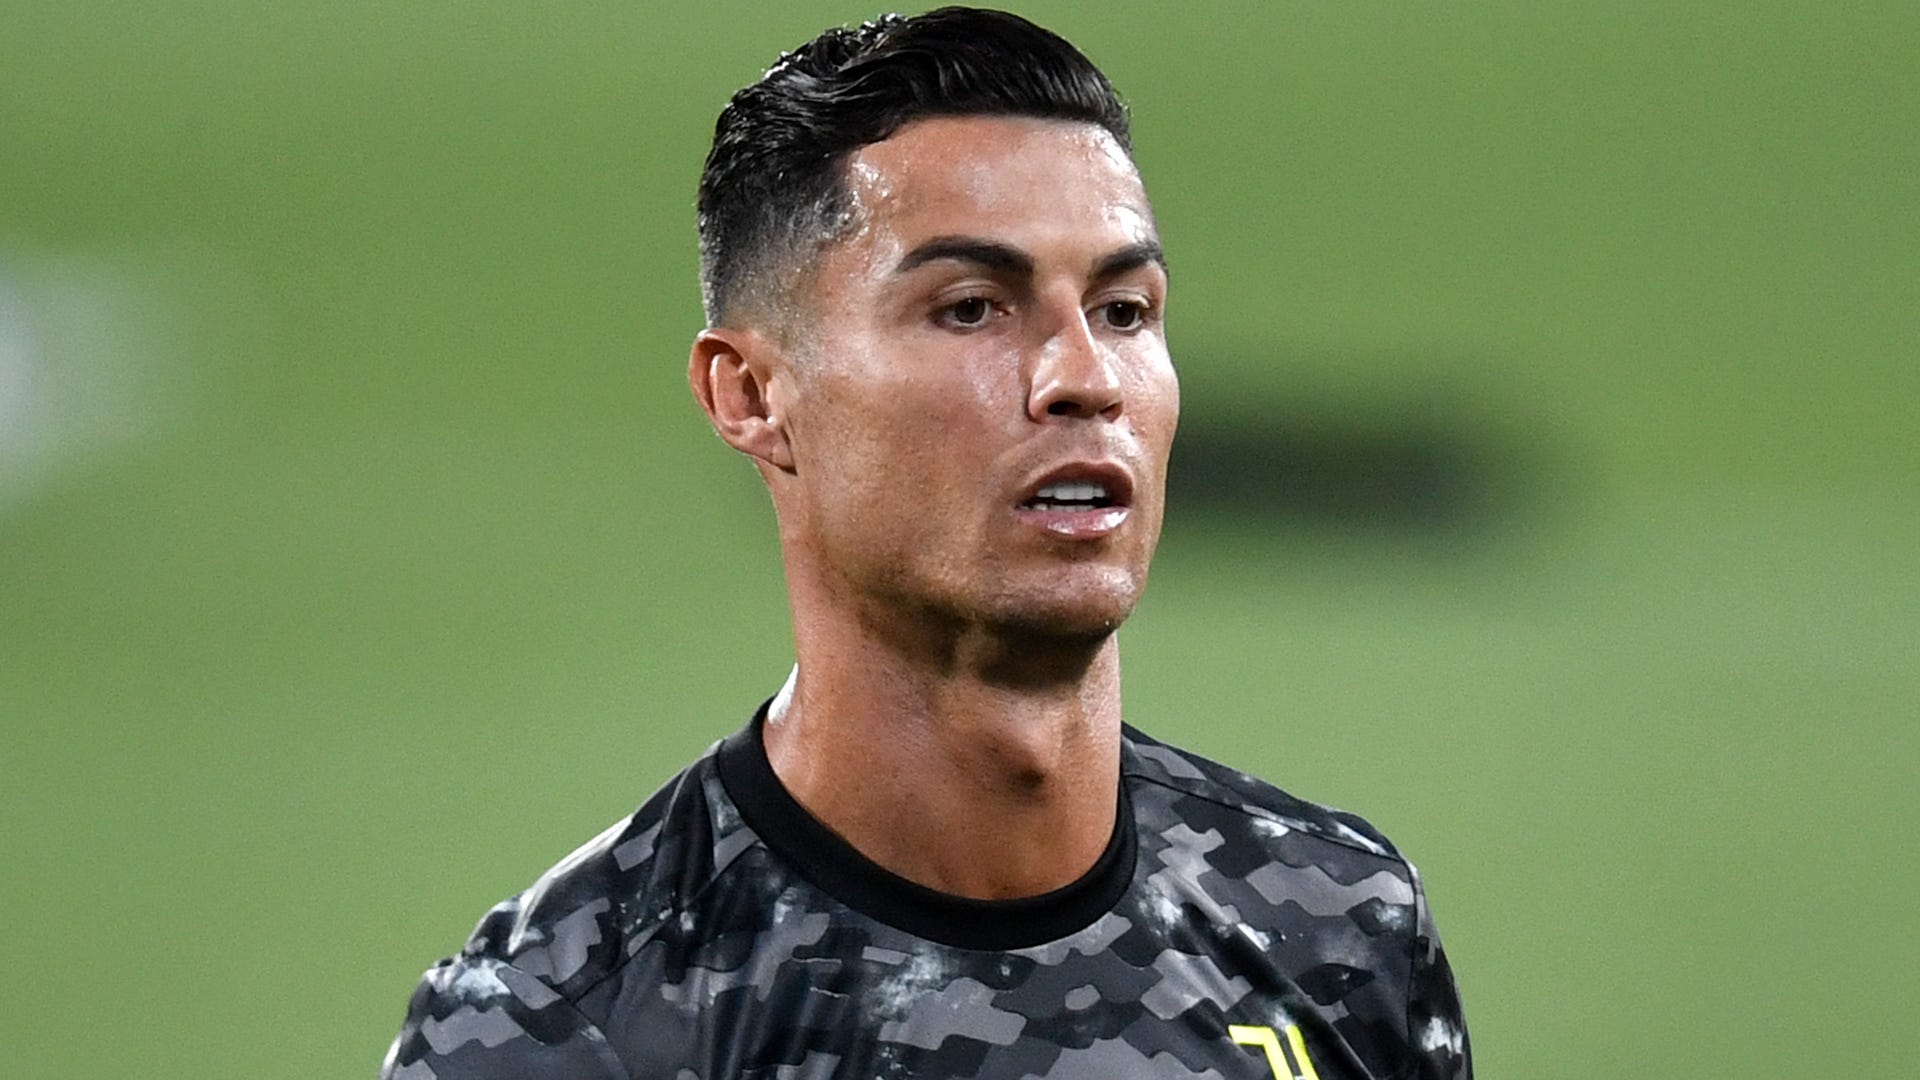 Cristiano Ronaldo Inspired Haircut Tutorial | TheSalonGuy - YouTube